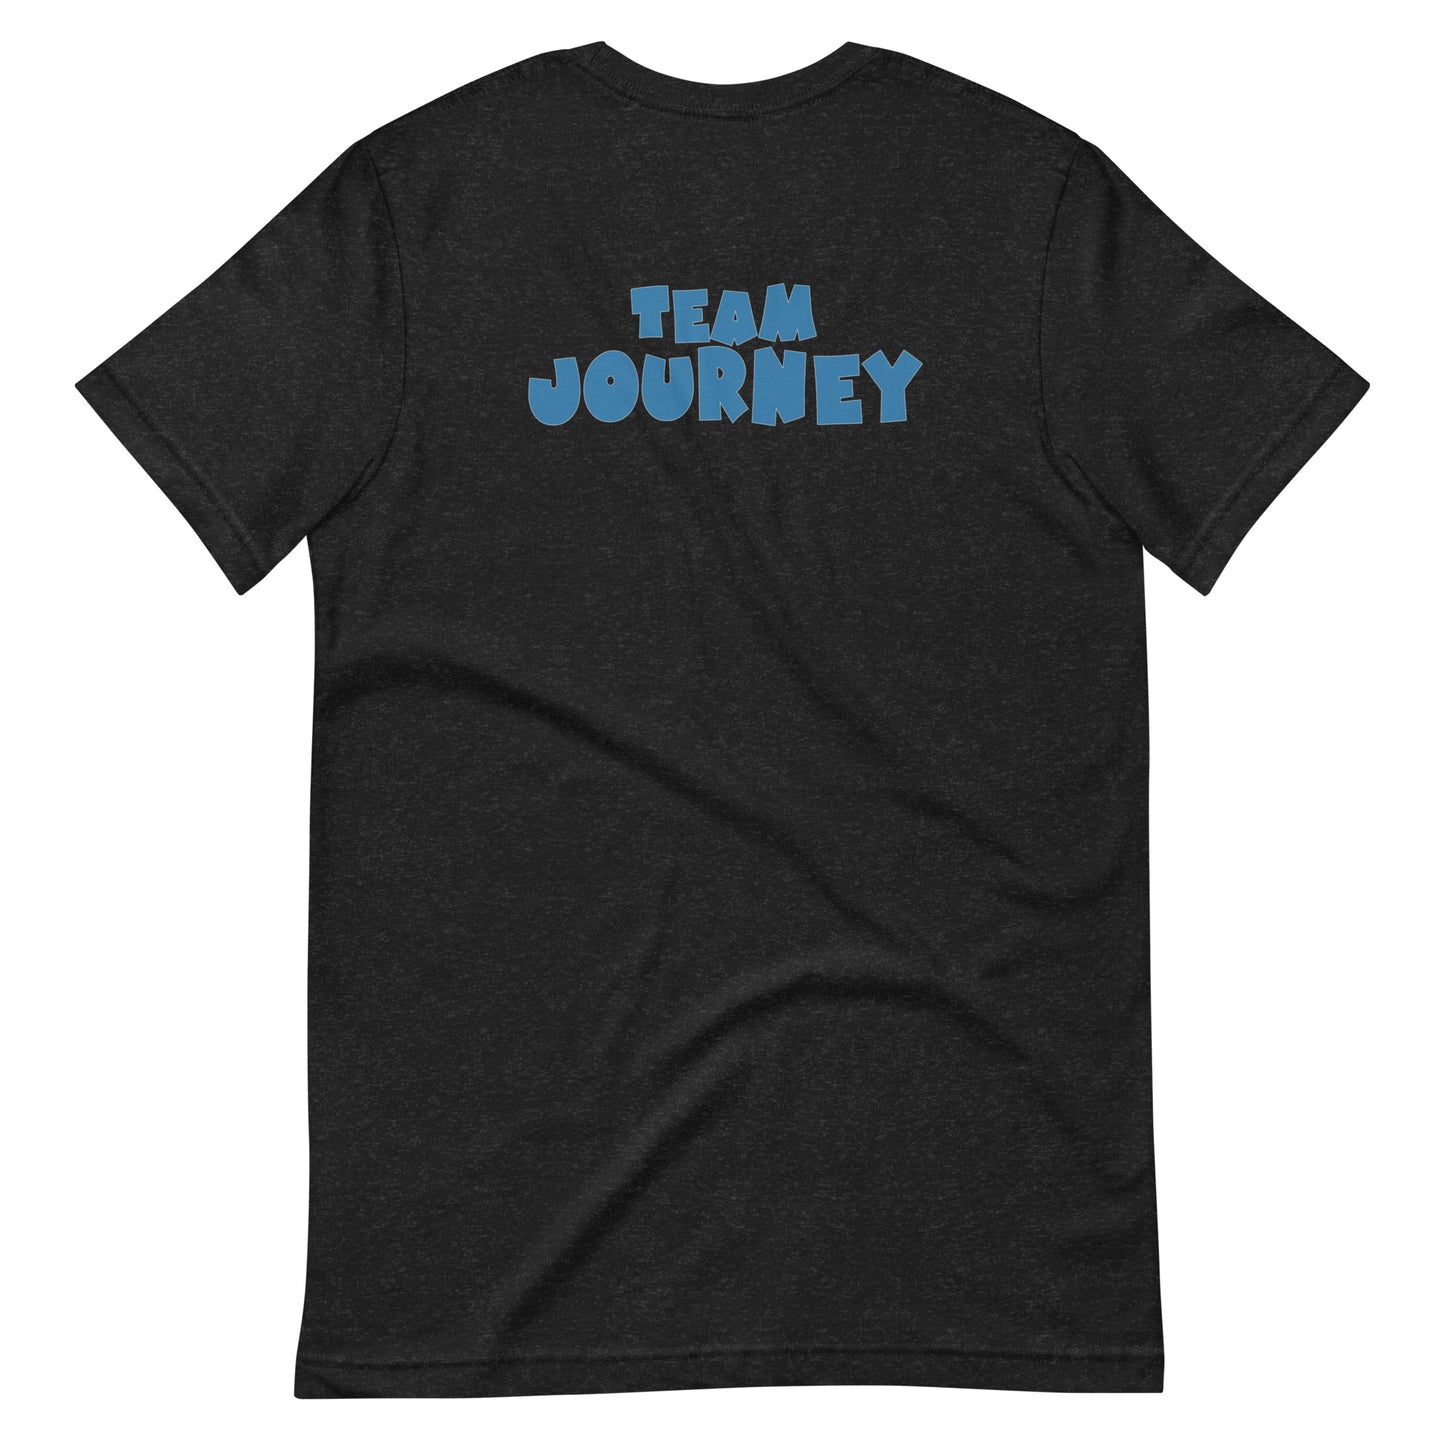 TEAM JOURNEY Unisex t-shirt